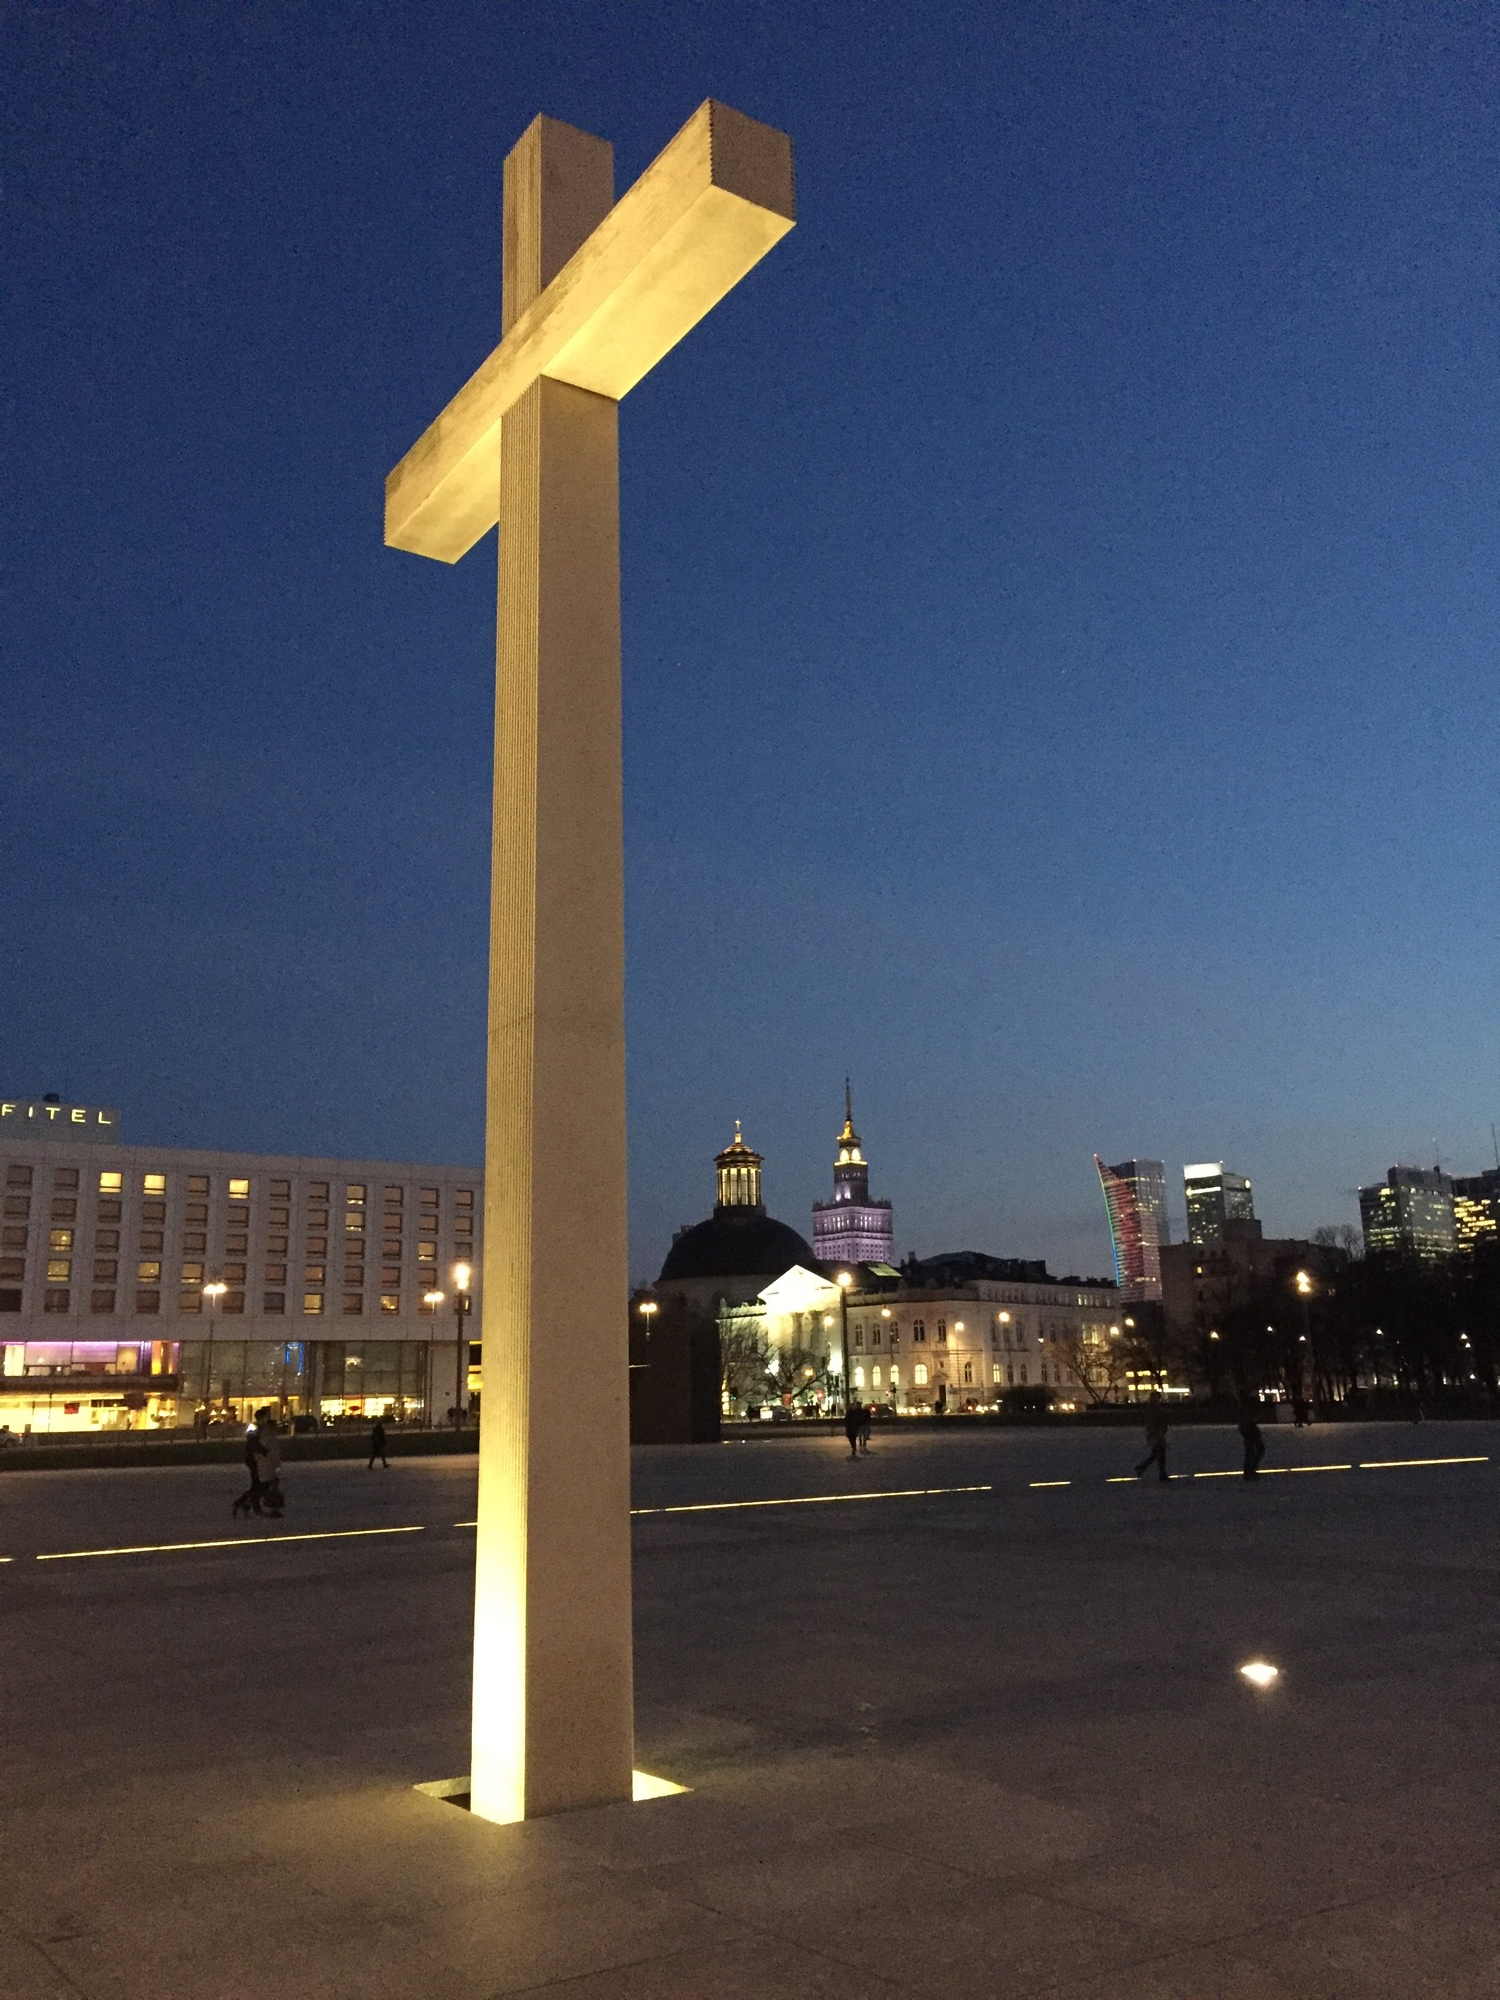 großes Kreuz im Vordergrund am Plac Piłsudskiego / Piłsudski Square